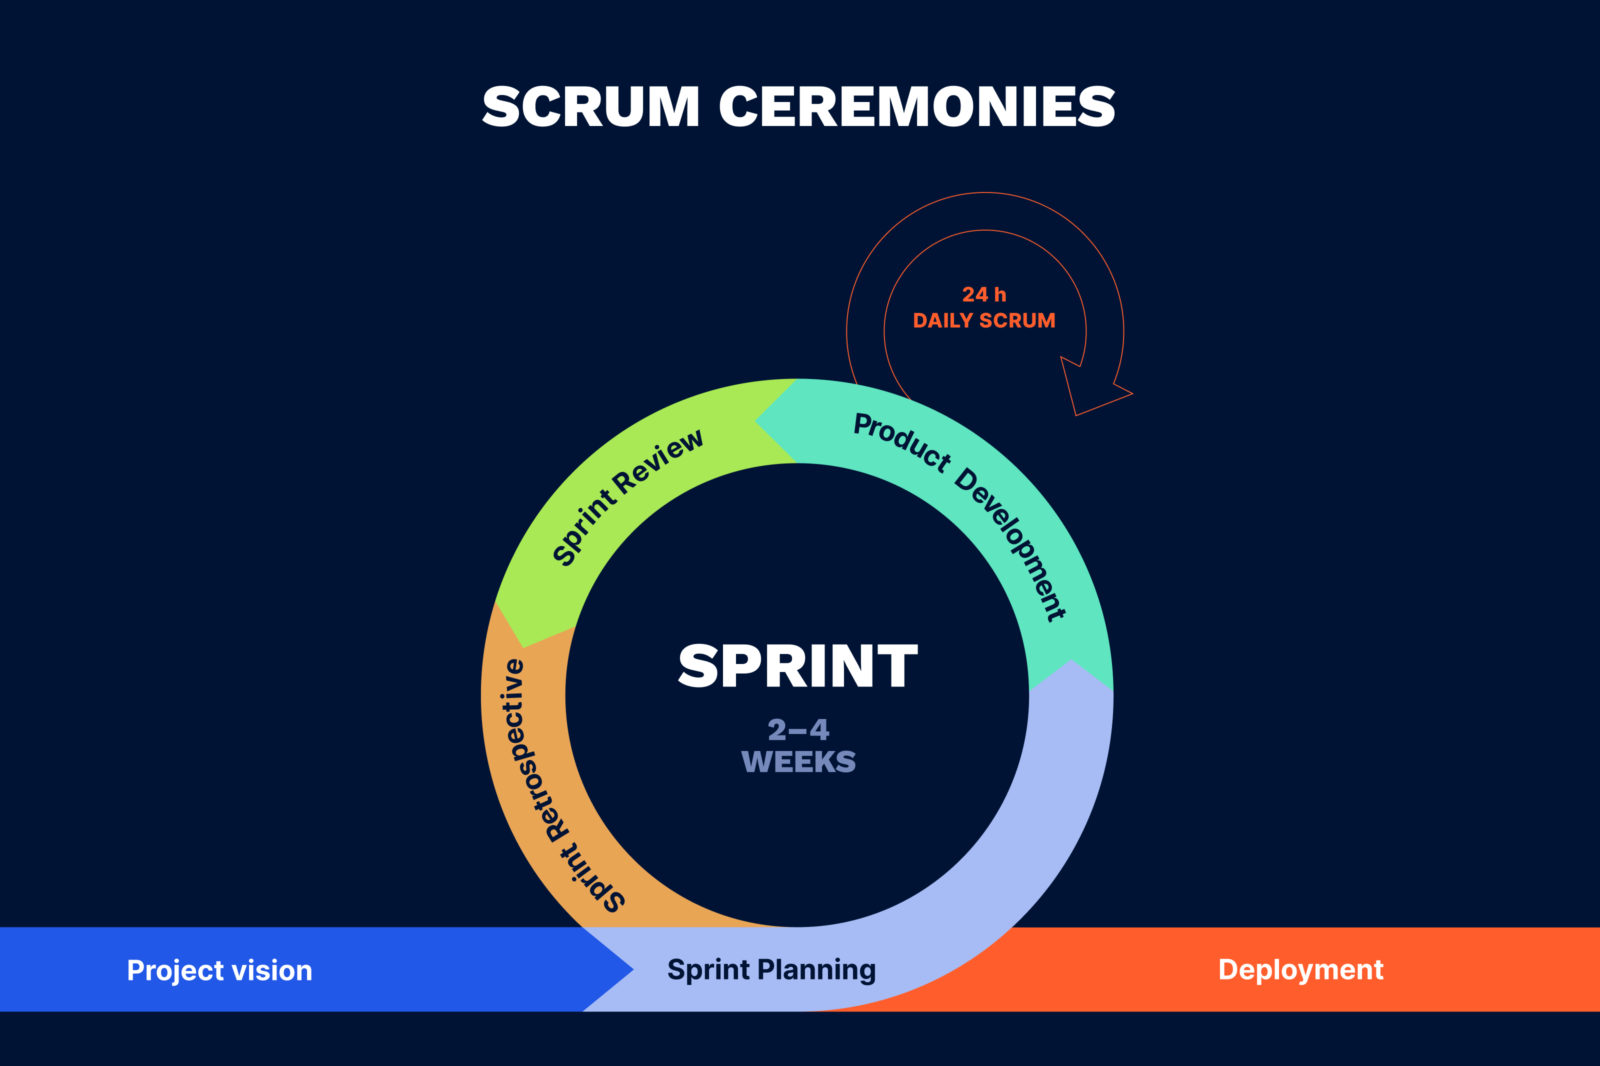 Scrum ceremonies in agile methodology